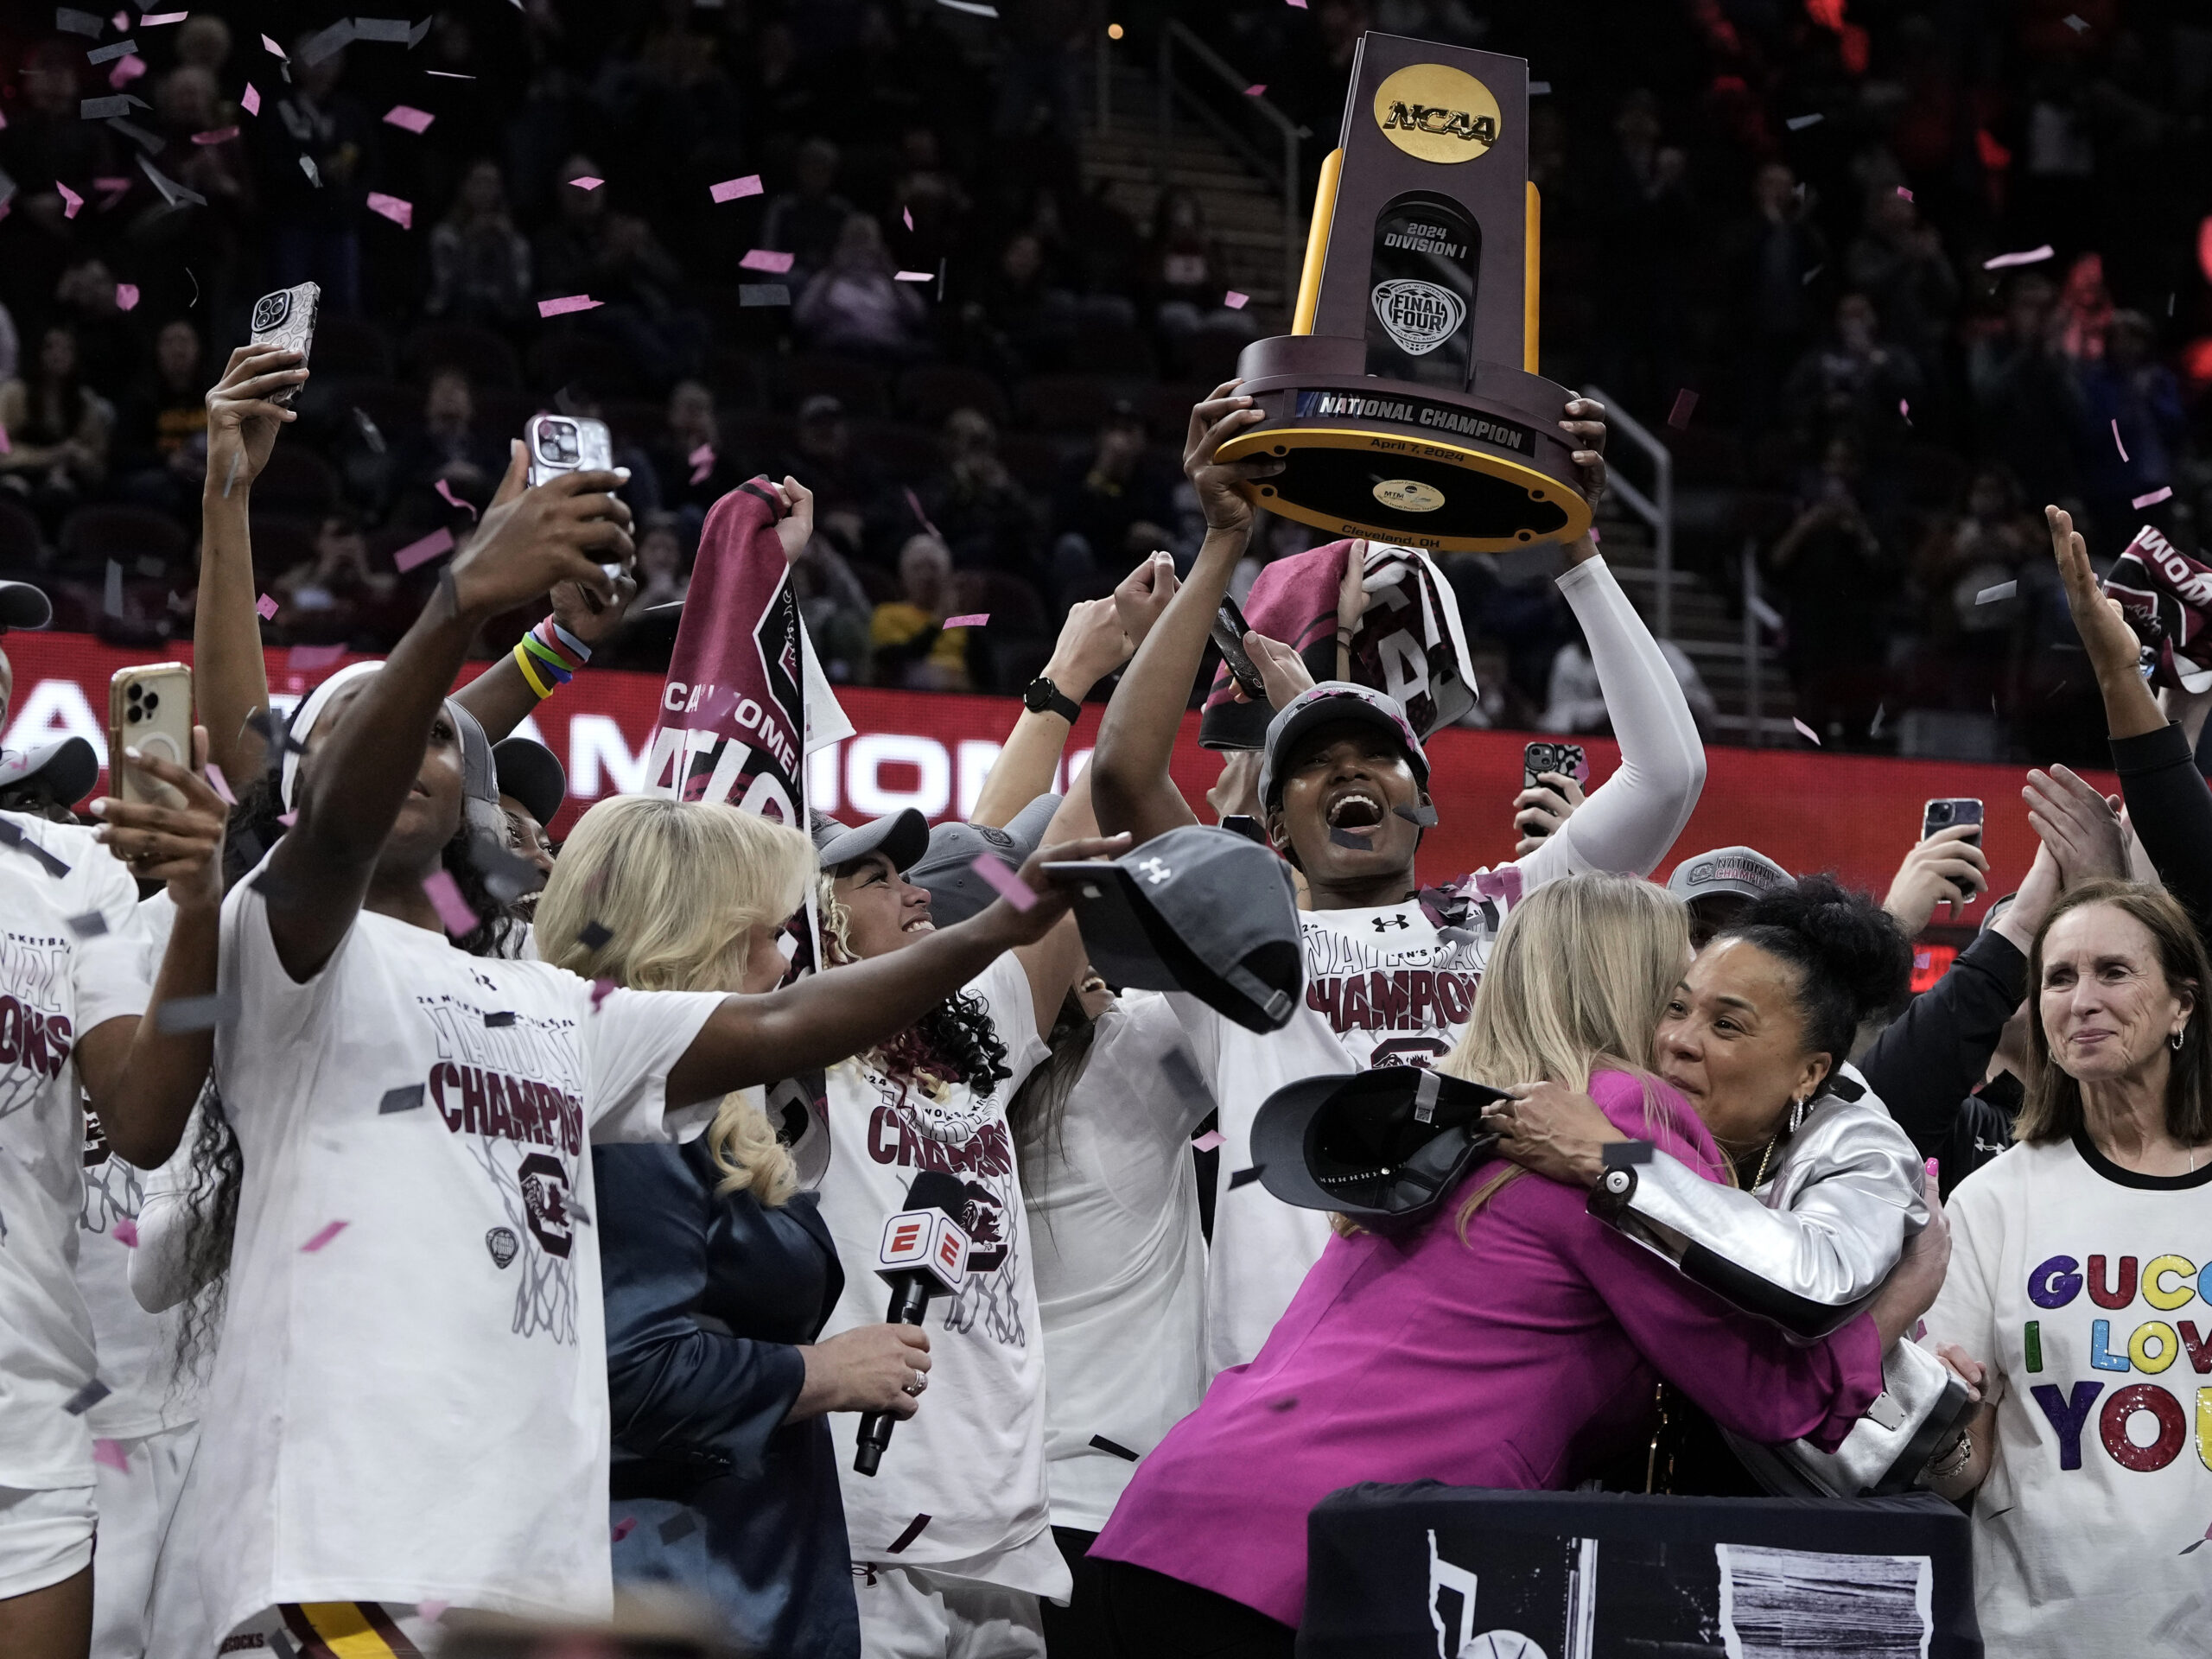 South Carolina defeats Iowa to win the women’s NCAA basketball championship